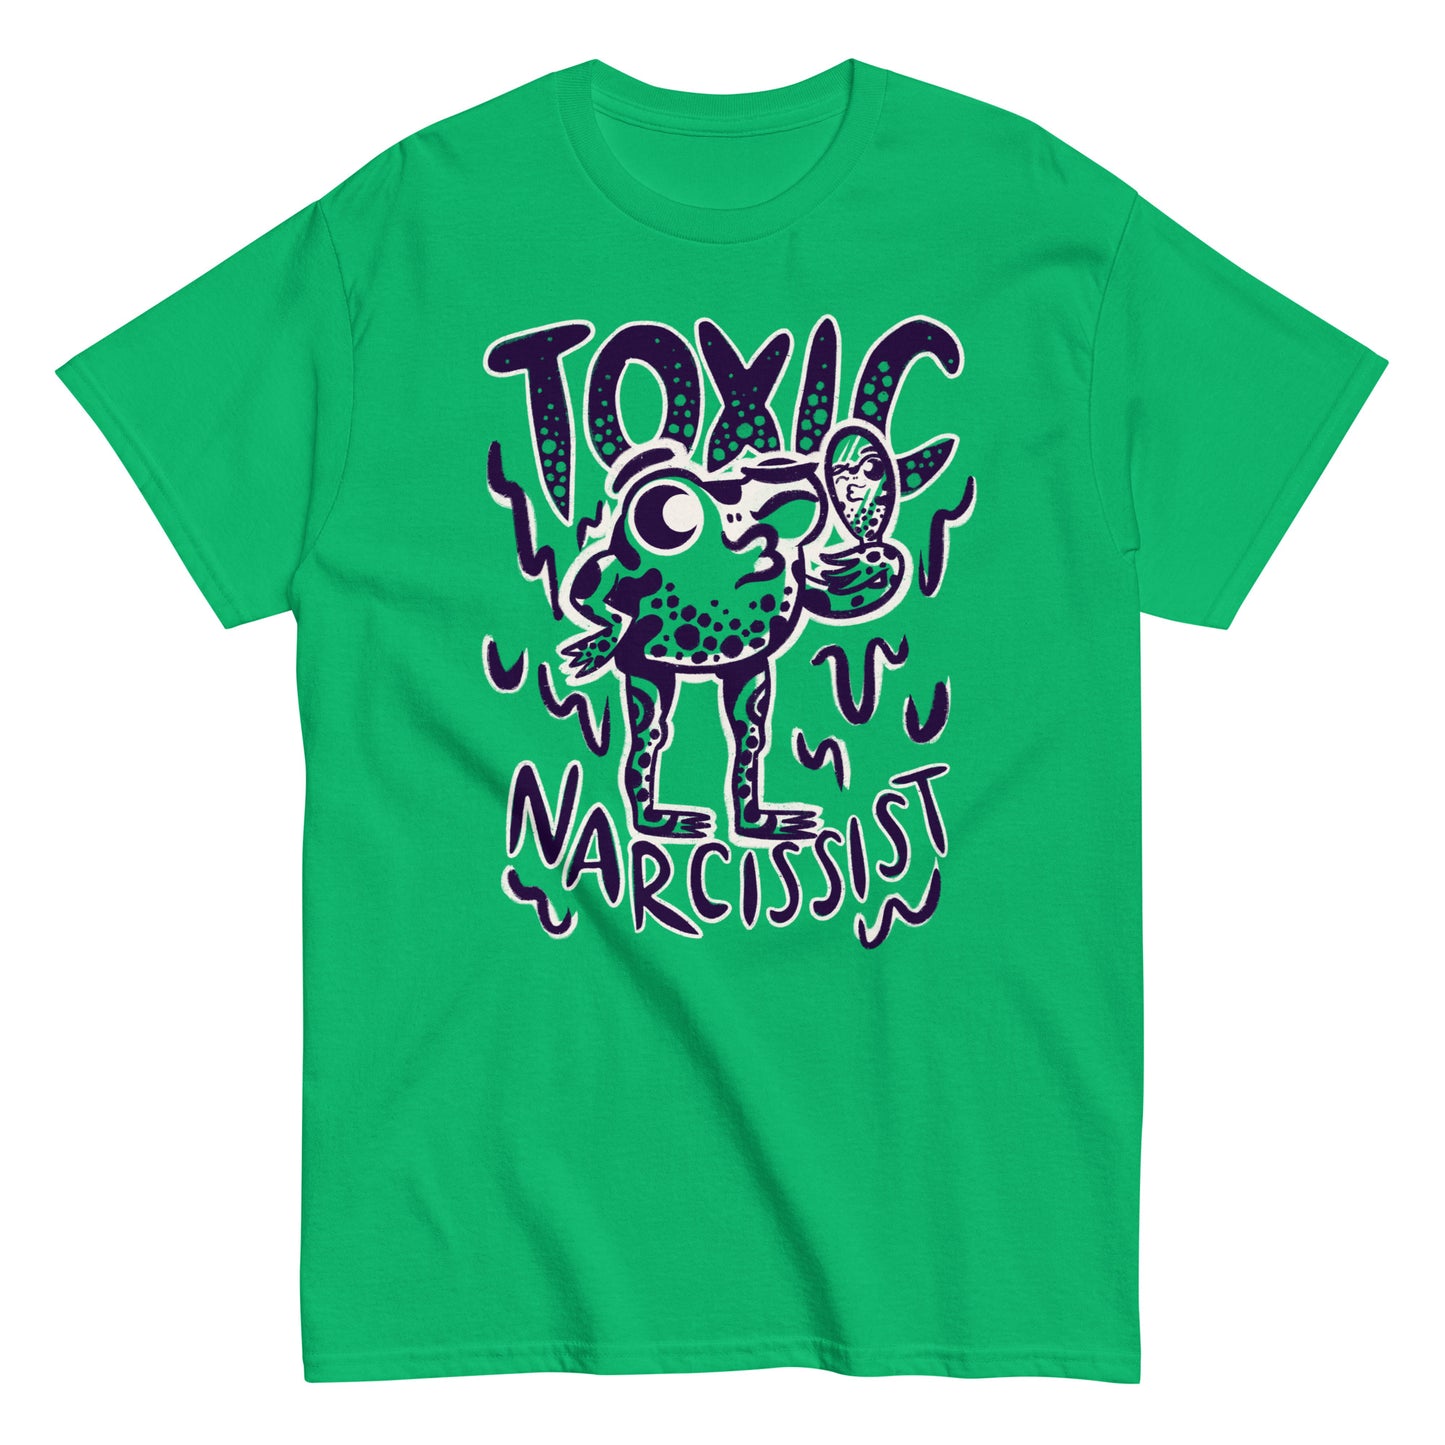 Toxic Narcissist - Funny Frog T-Shirt